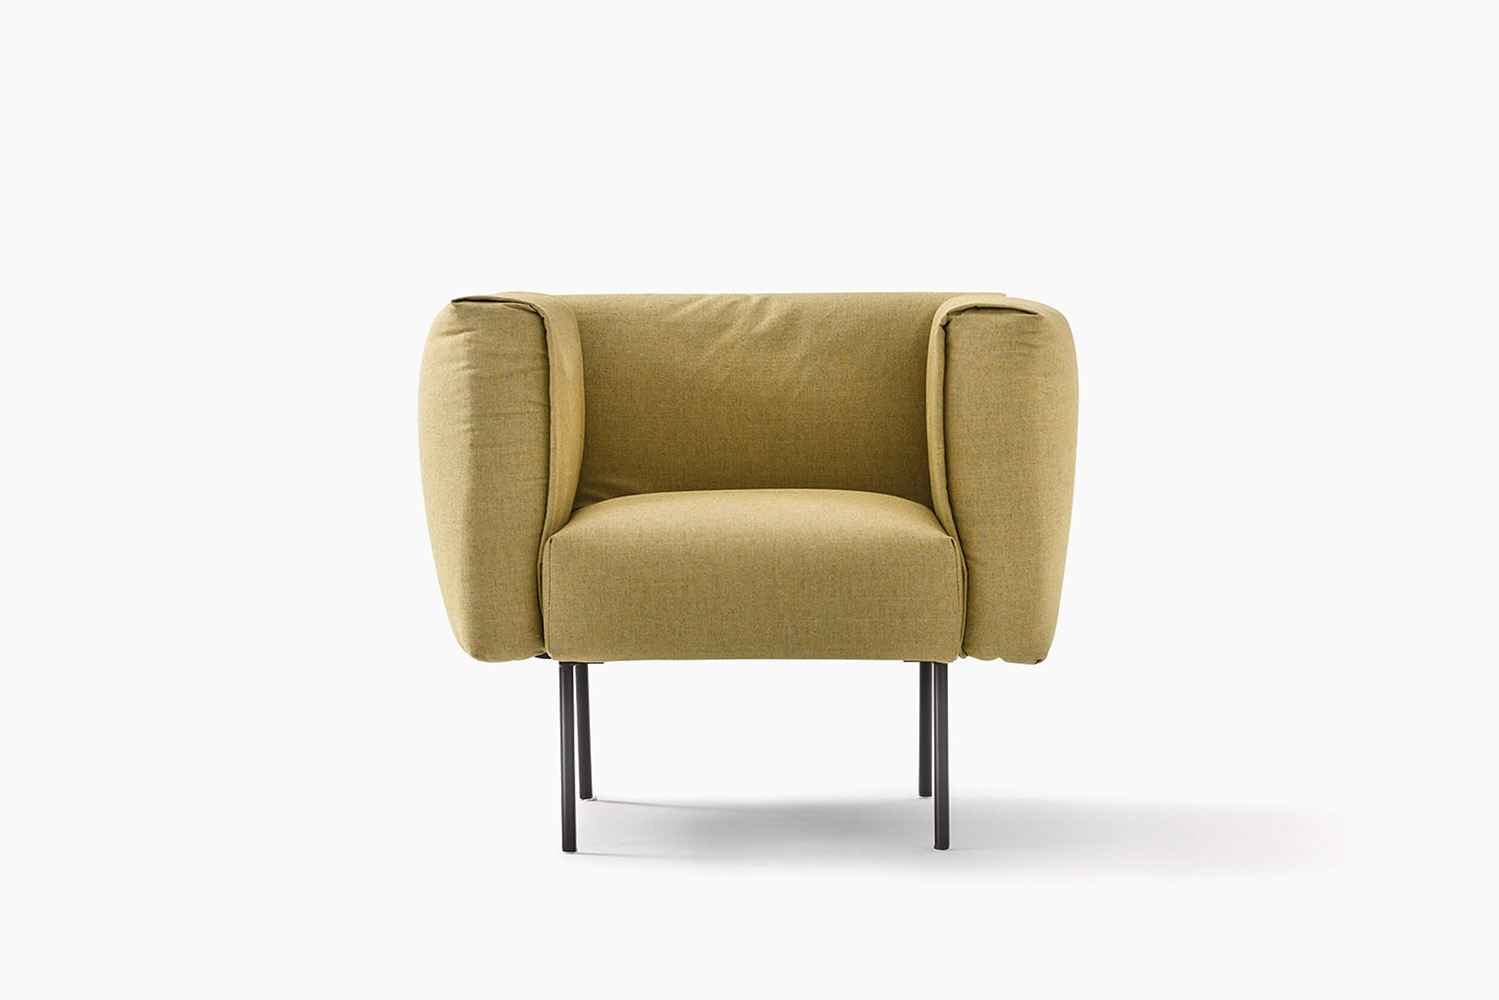 Onni luxury Italian modern armchair by Novamobili. Sold by Krieder UK.